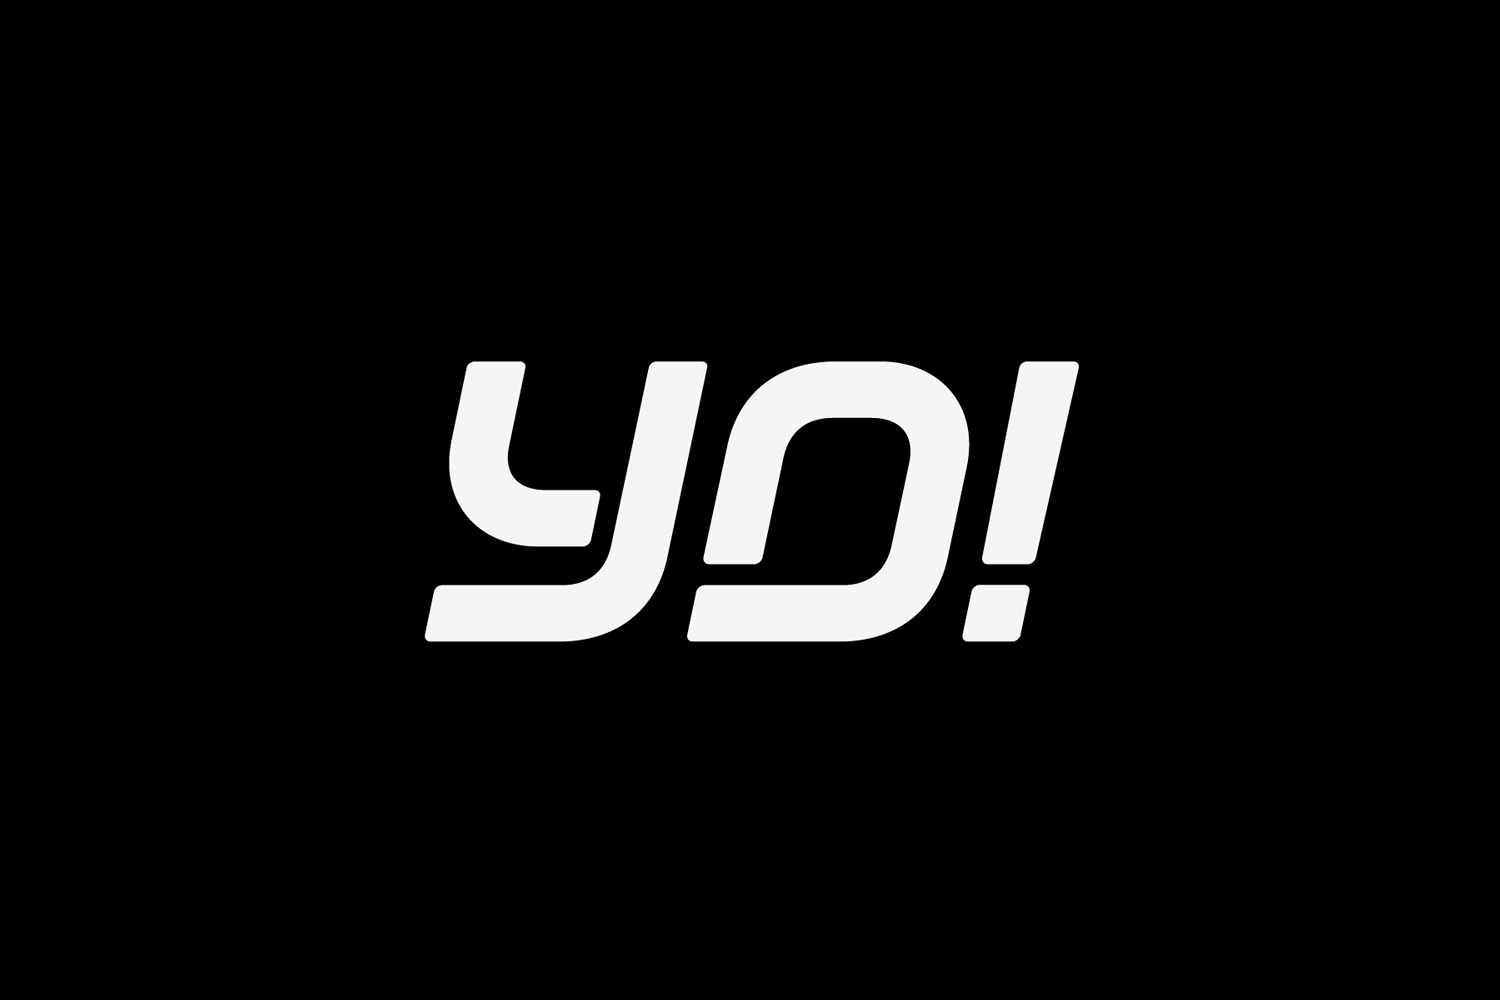 New logo for Yo! Sushi designed by London-based Paul Belford Ltd.